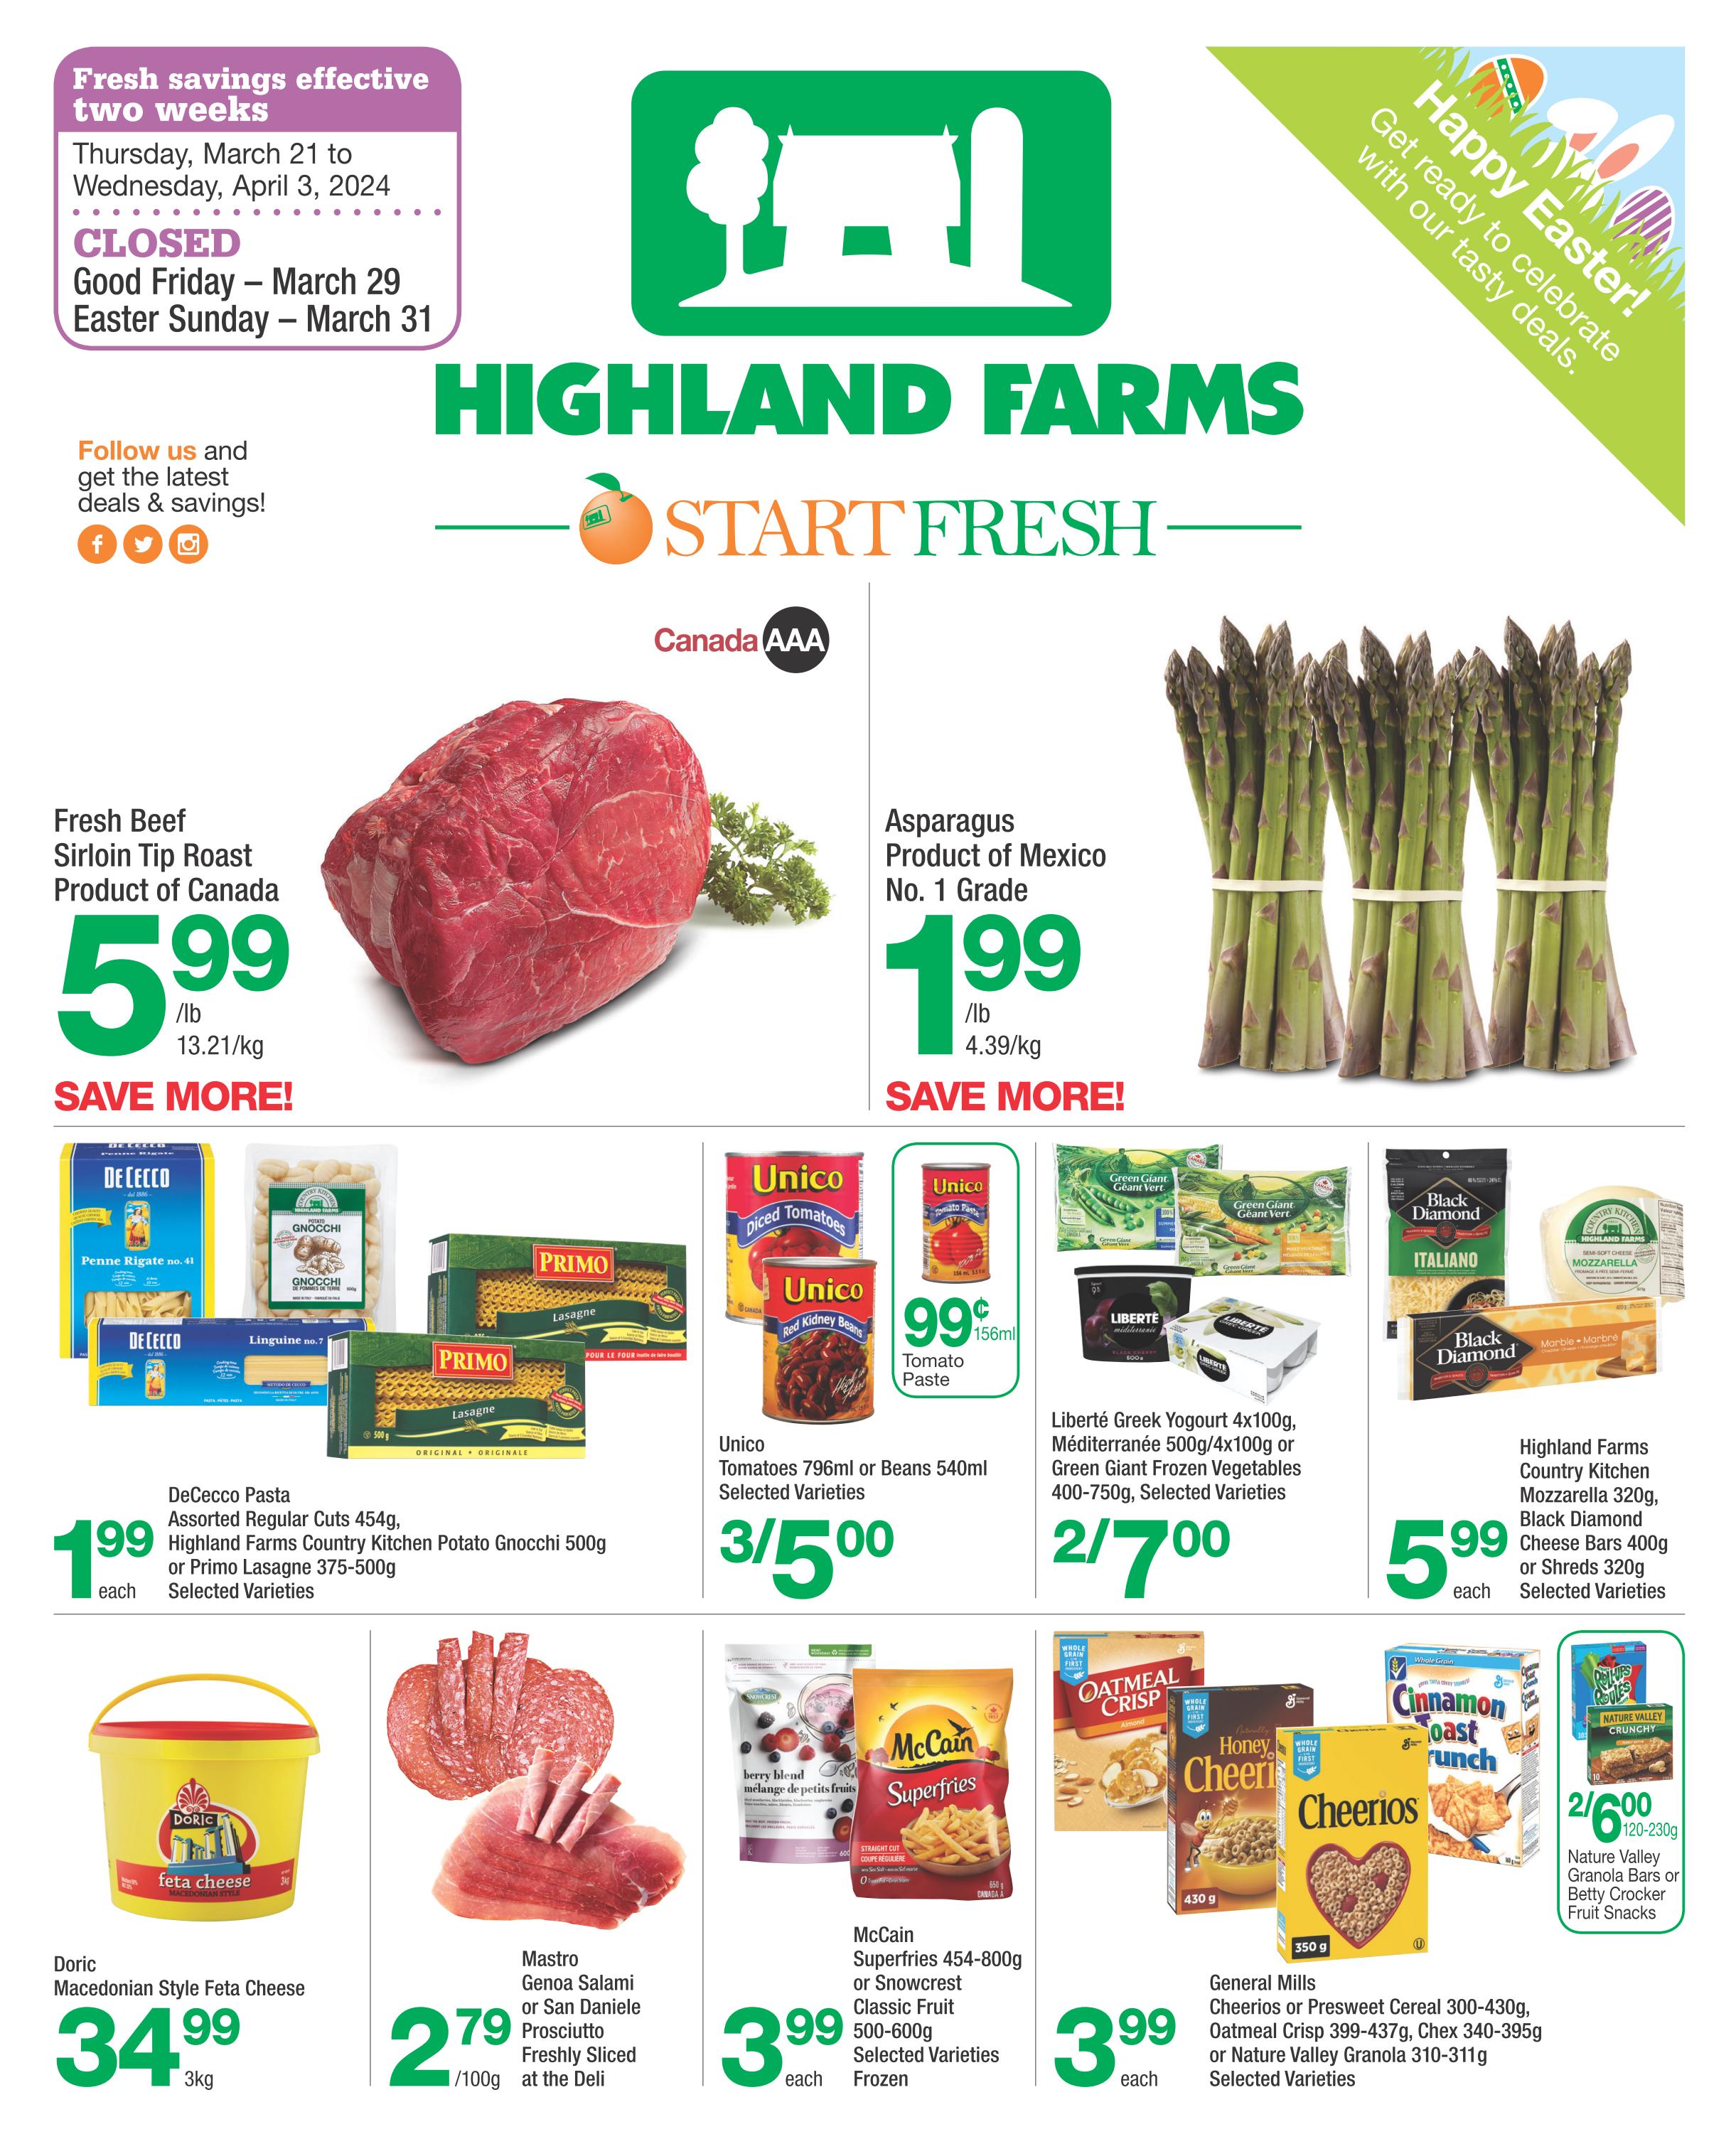 Highland Farms - Flyer Specials